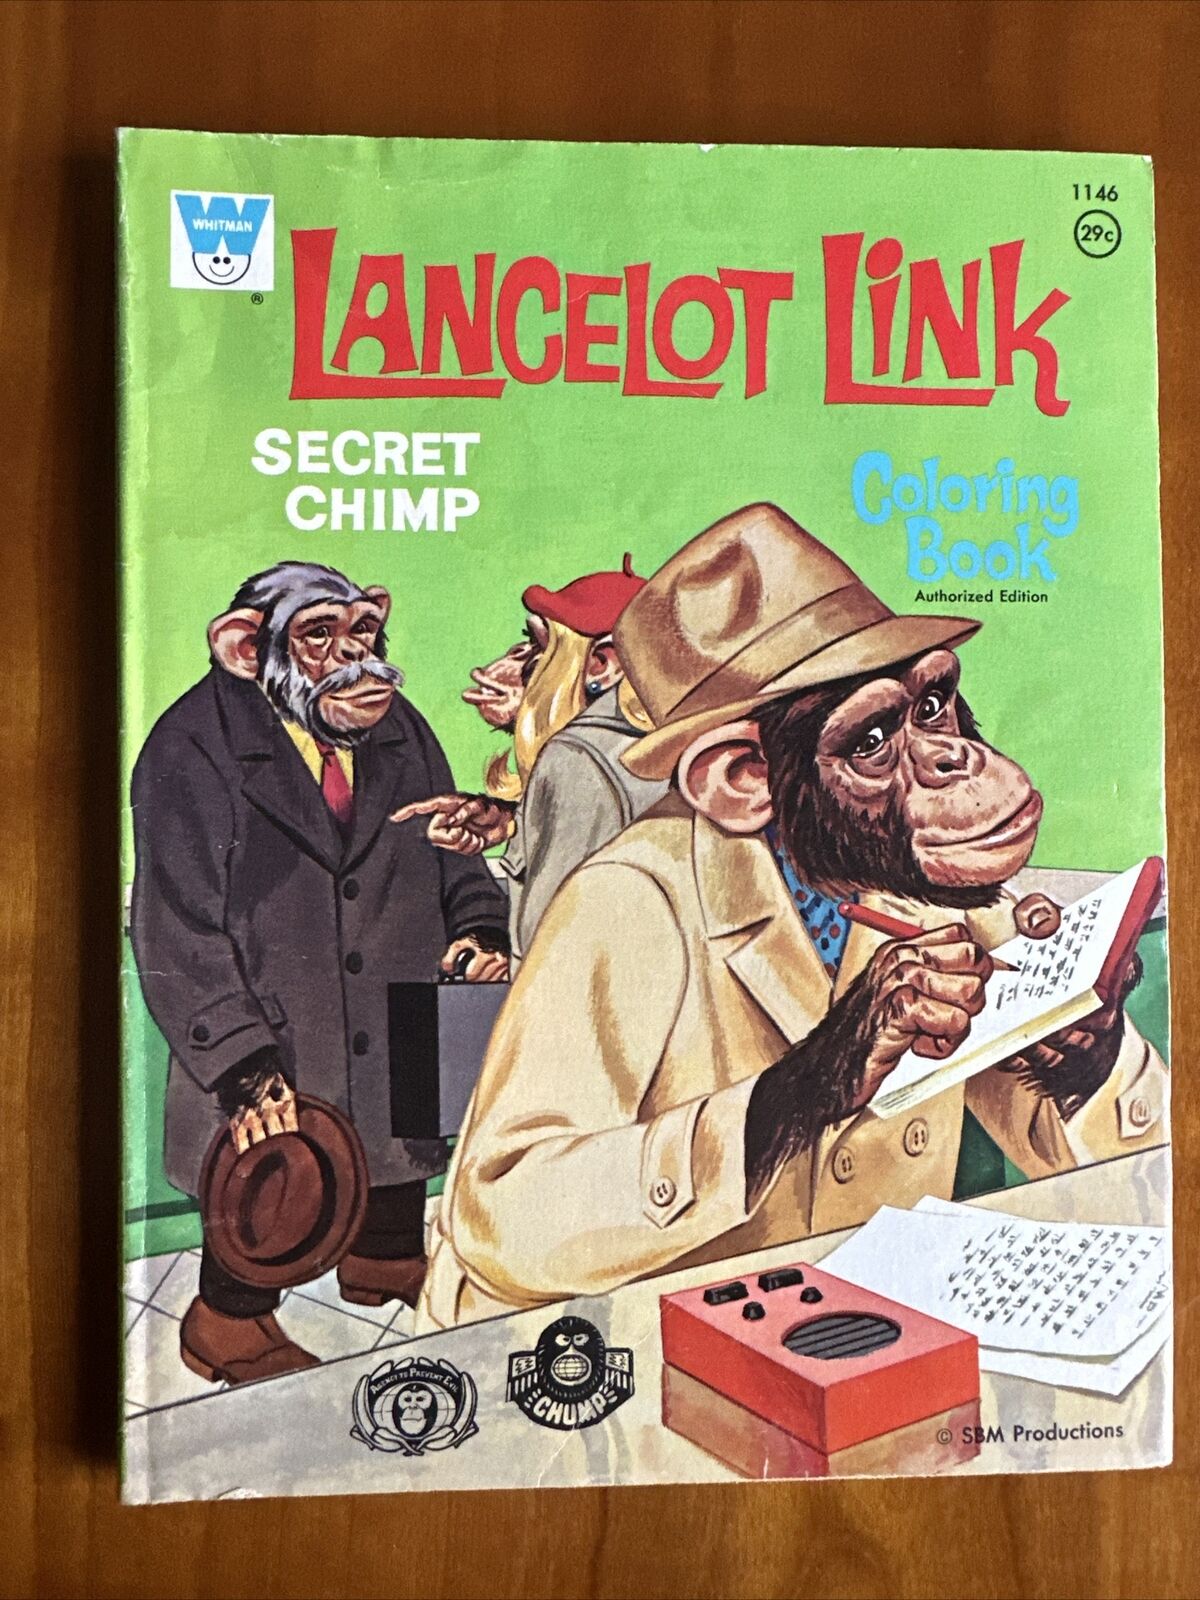 Lancelot Link secret chimp coloring book man 1971 vintage Whitman Kids Book